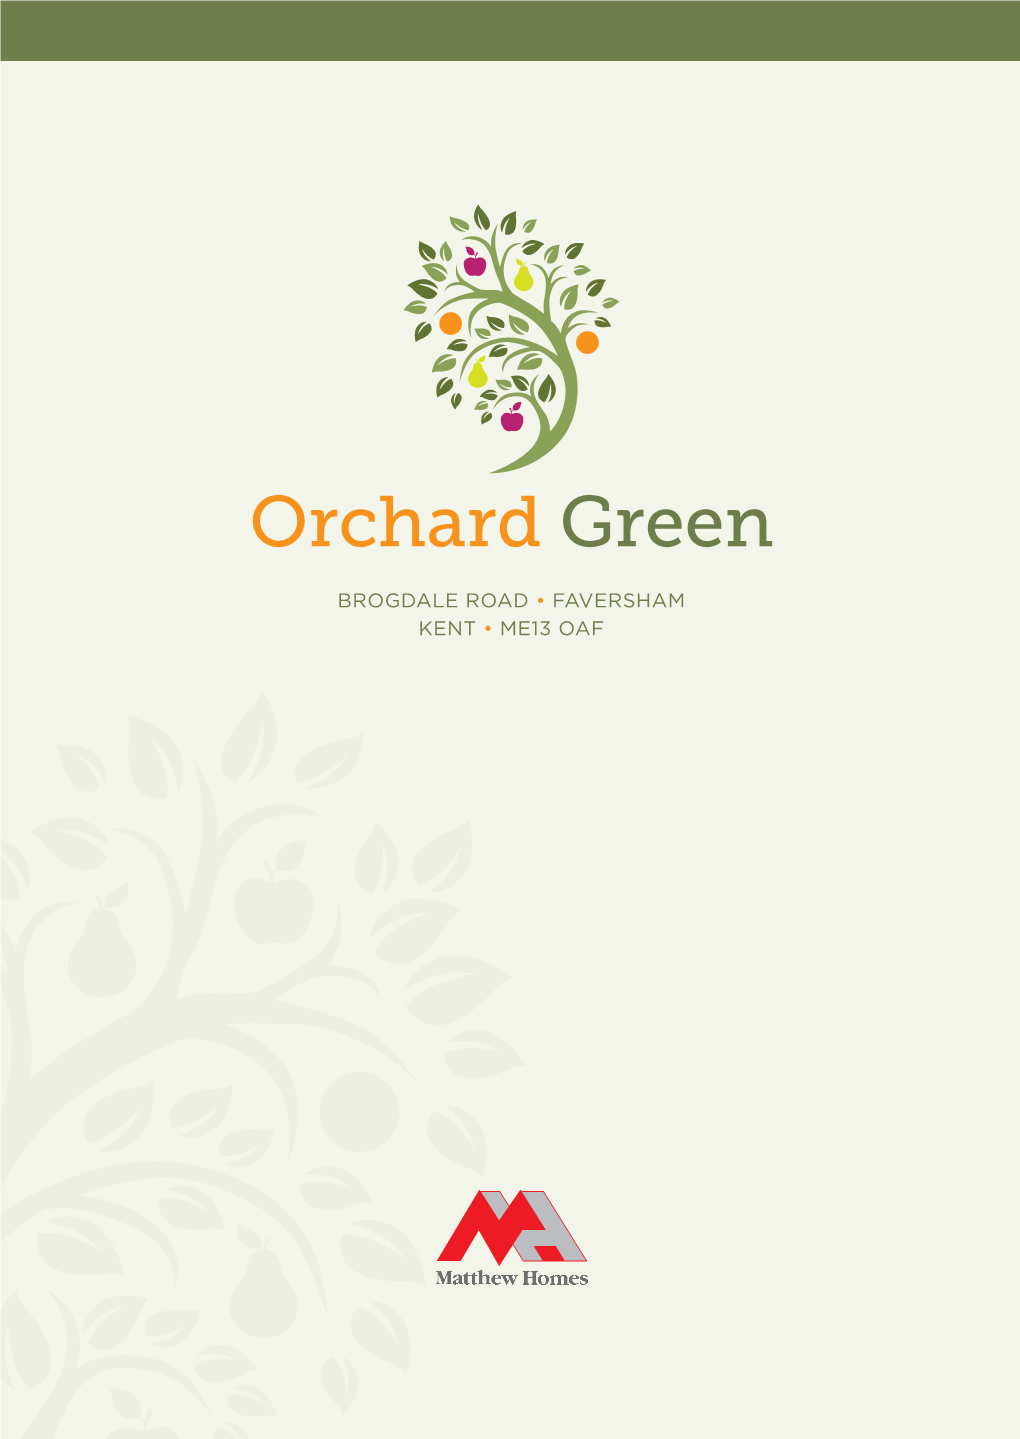 Orchard Green J4 A229 J5 A28 M20 A249 M26 J2a M2 J6 J6 J7 A2 A25 A228 J7 CANTERBURY Sevenoaks BROGDALE ROAD • FAVERSHAM MAIDSTONE A256 KENT • ME13 OAF